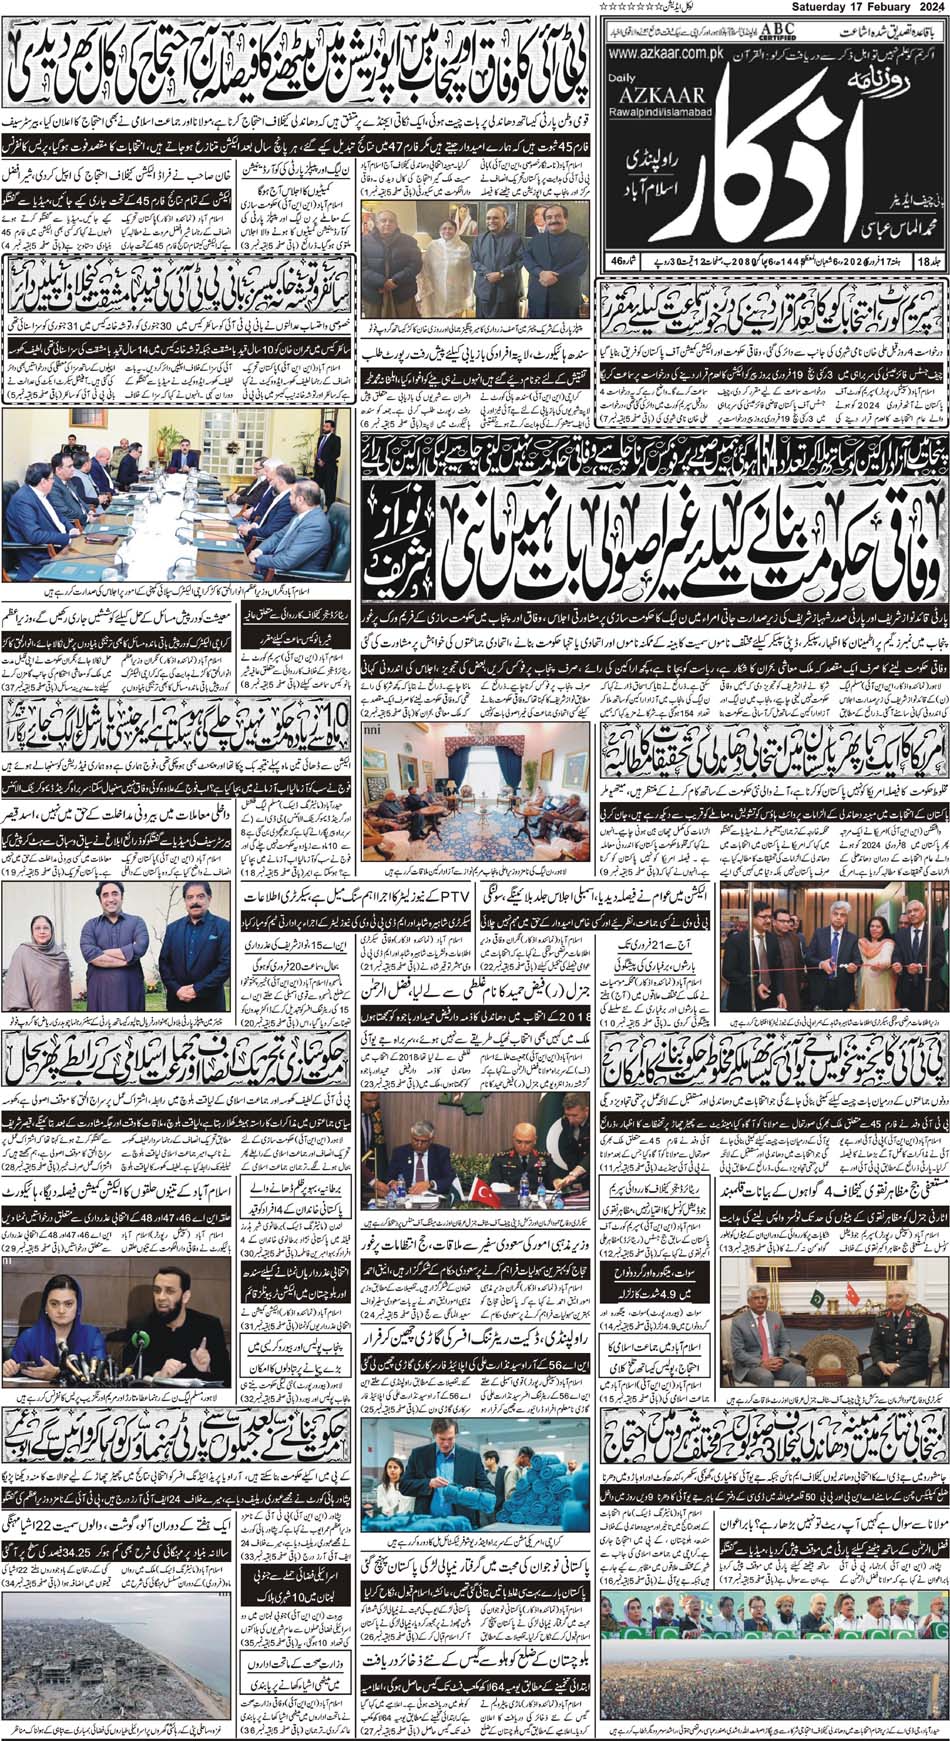 Azkaar Epaper Lahore edition